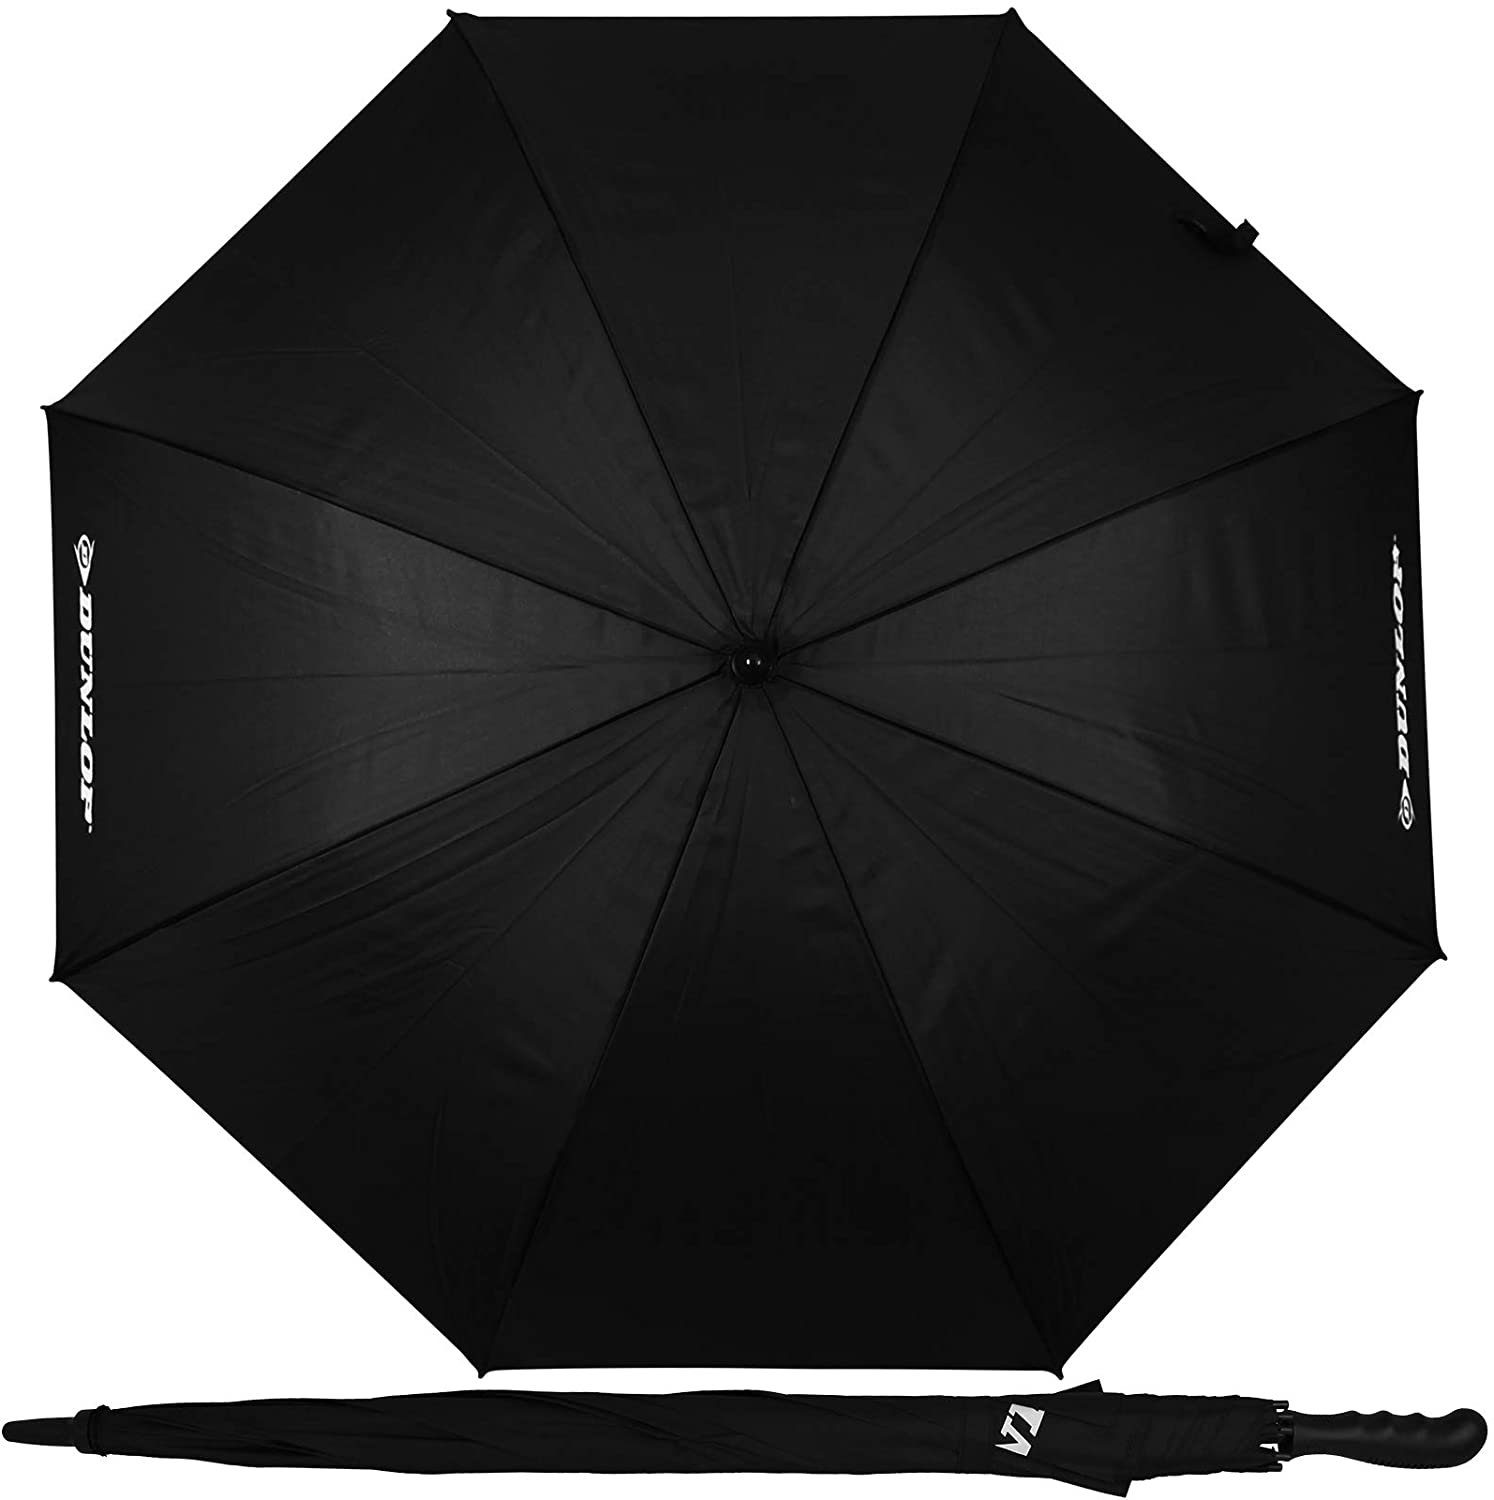 Dokado Partnerschirm XXL Familienschirm für Personen schwarz Regenschirm Partnerschirm Doppelregenschirm Stockschirm 130cm Paar mit Dunlop 2 Farbwahl